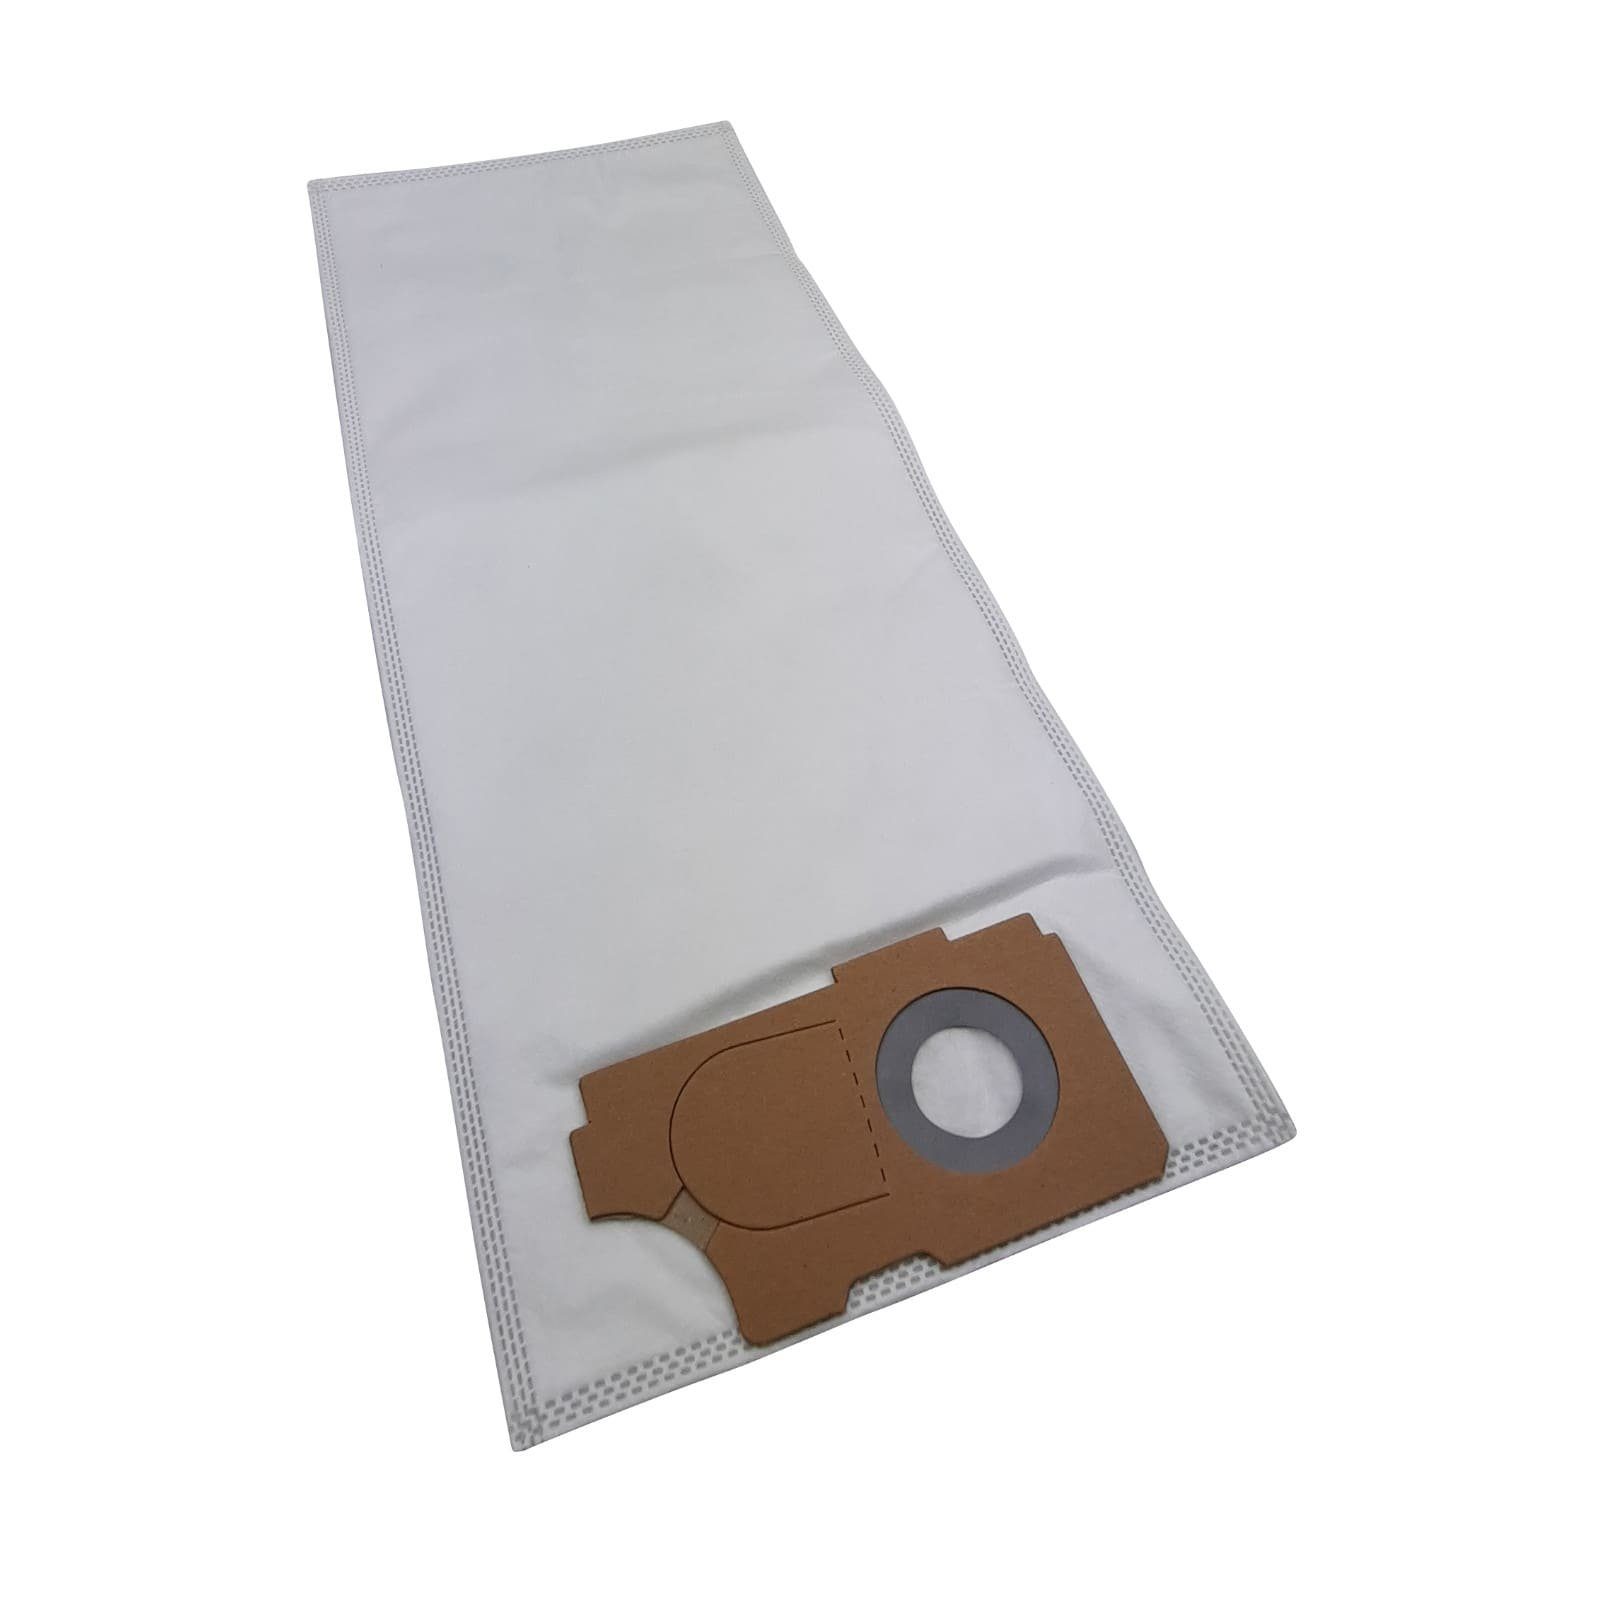 Reinica Staubsaugerbeutel passend für Clean a la Card Comfort 36, 10er-Pack Staubbeutel Saugerbeutel Beutel Filtertüten